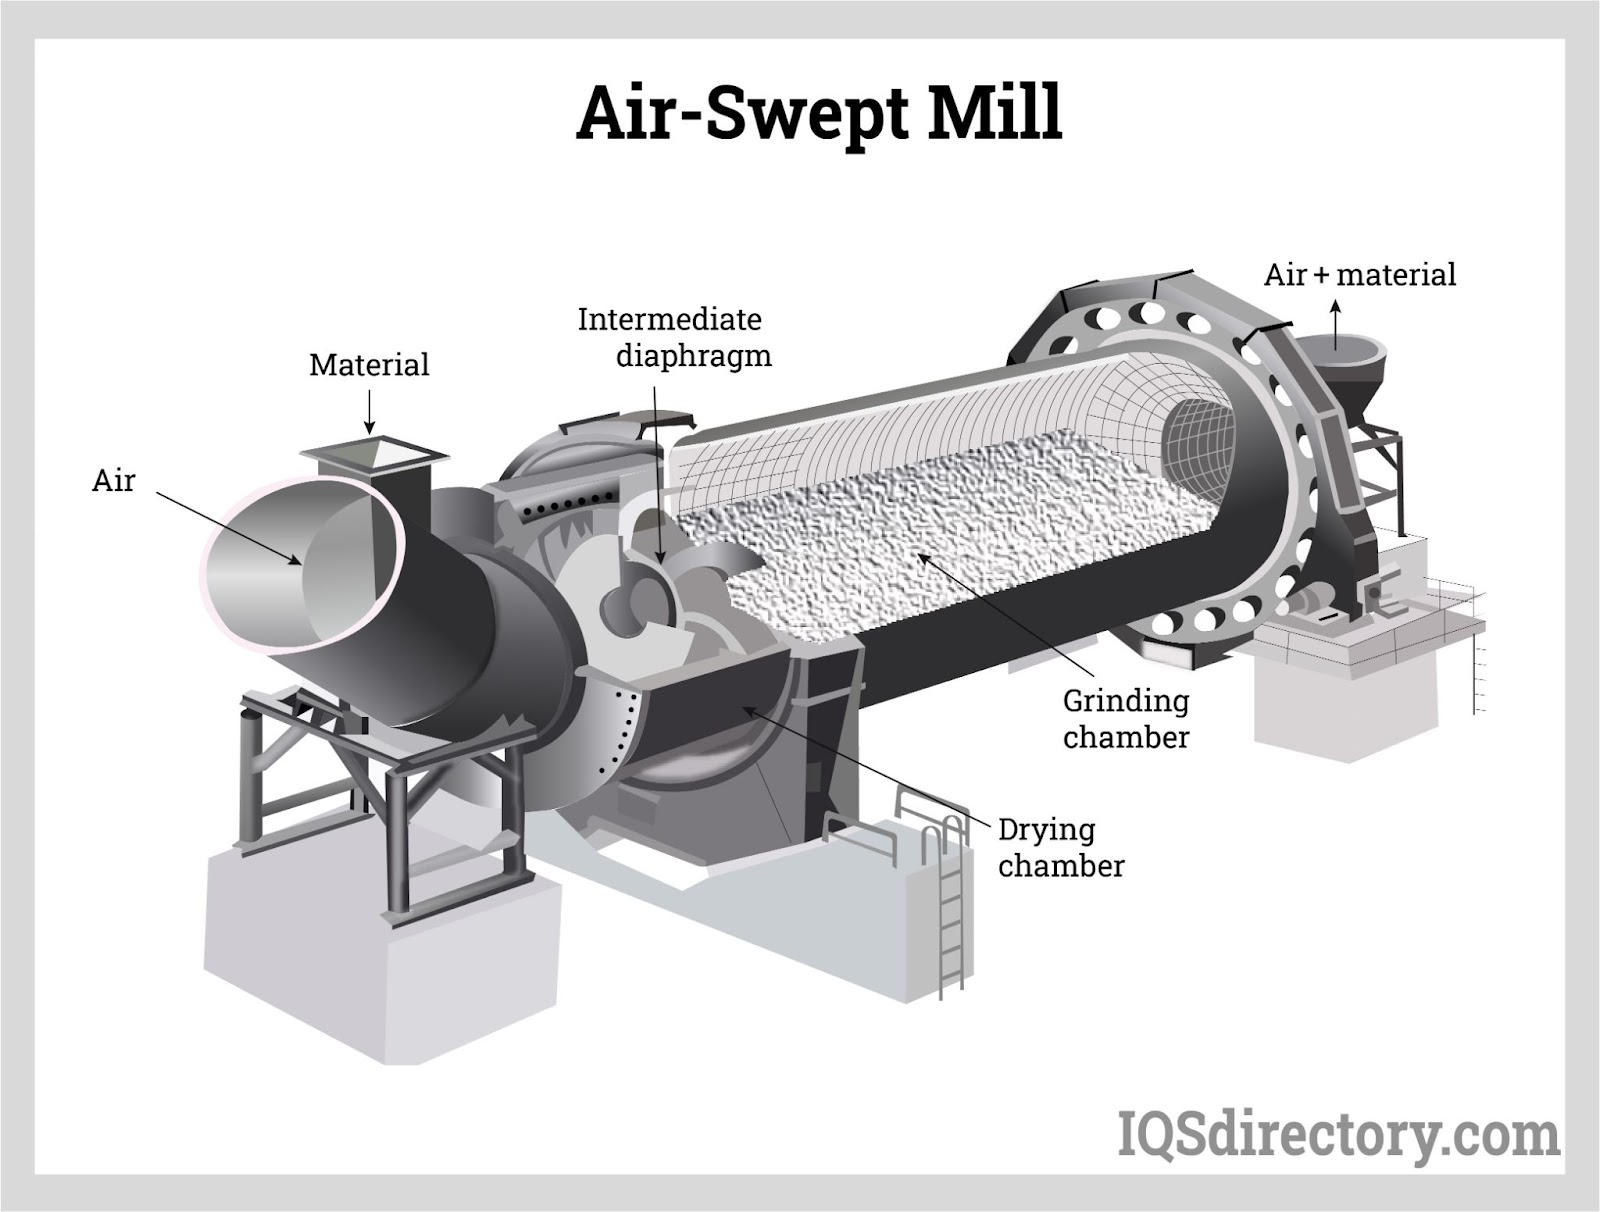 Air-Swept Mill